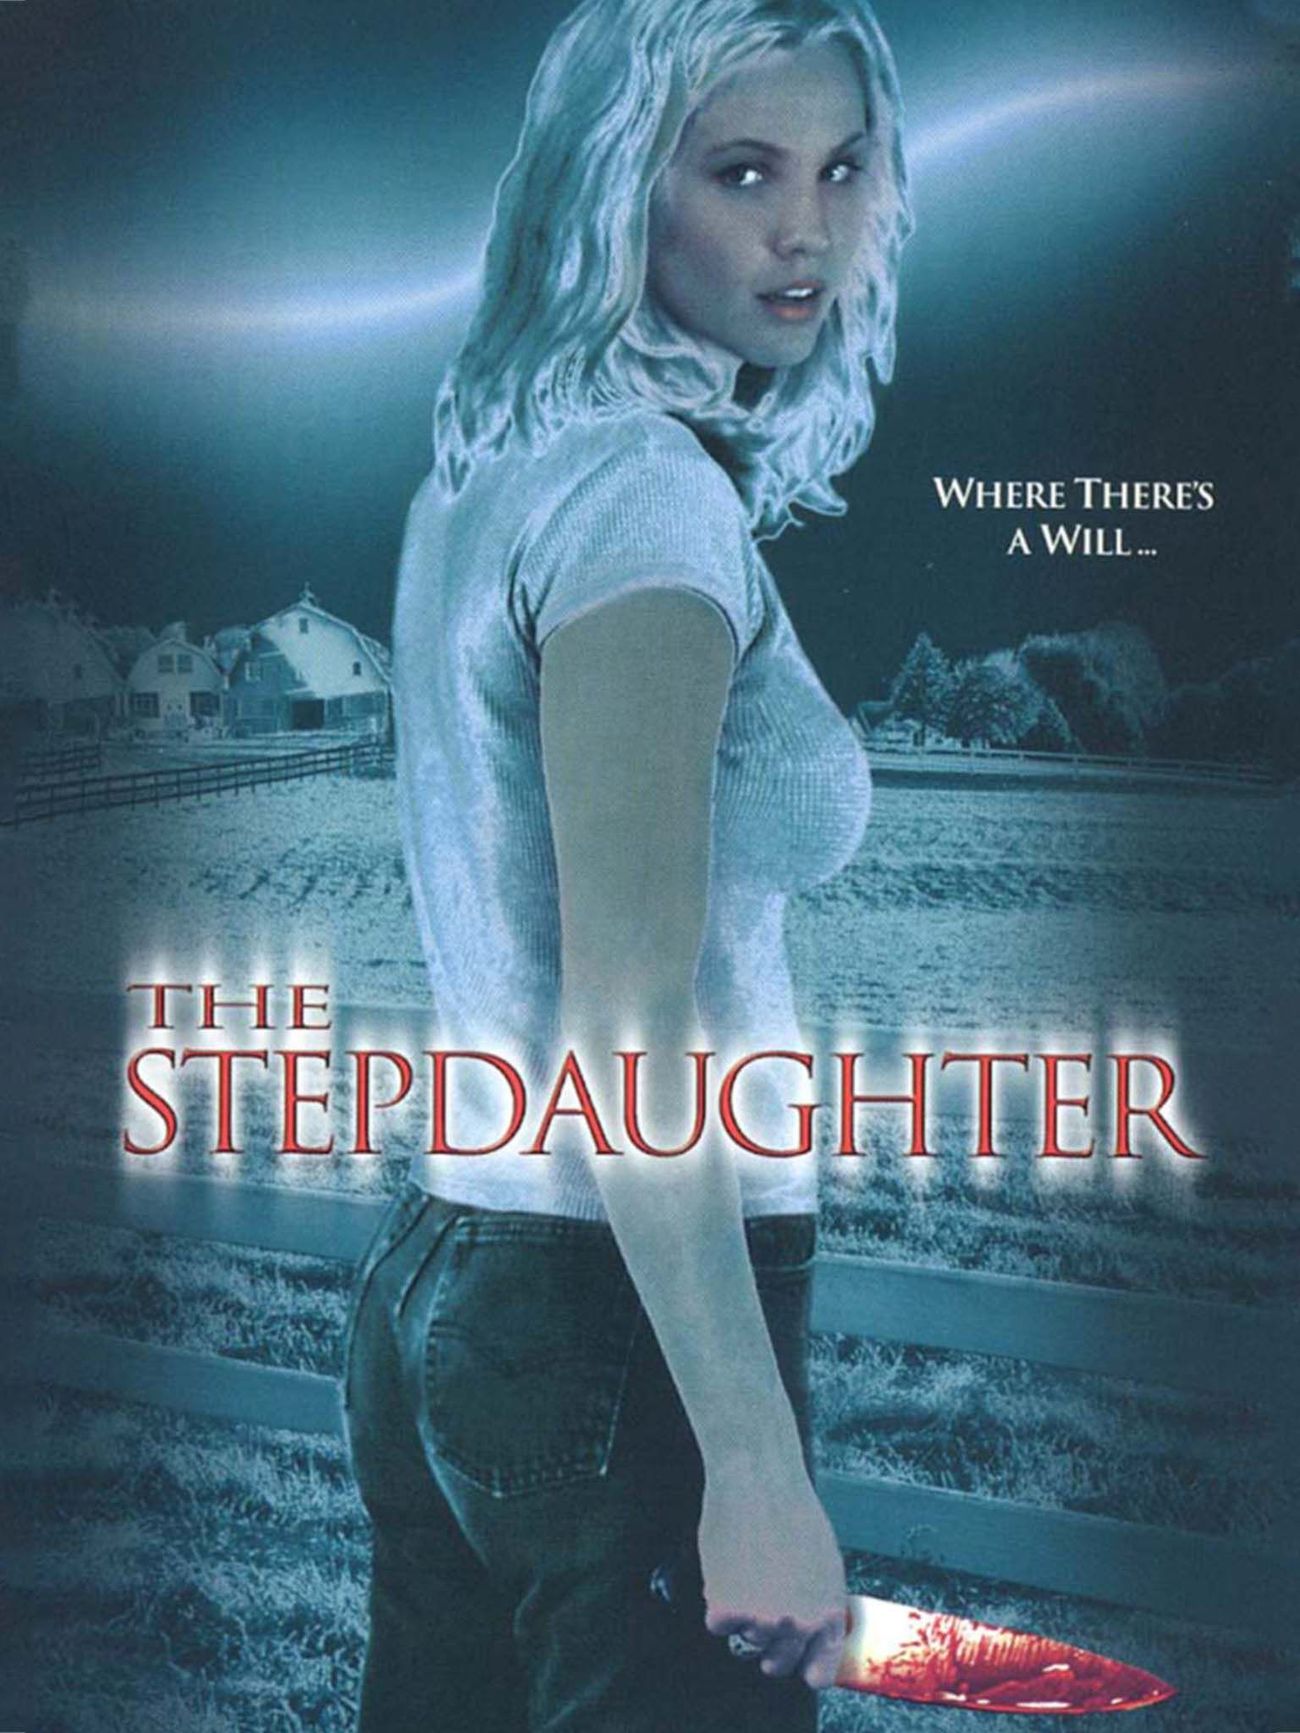 The Stepdaughter (2000) Screenshot 1